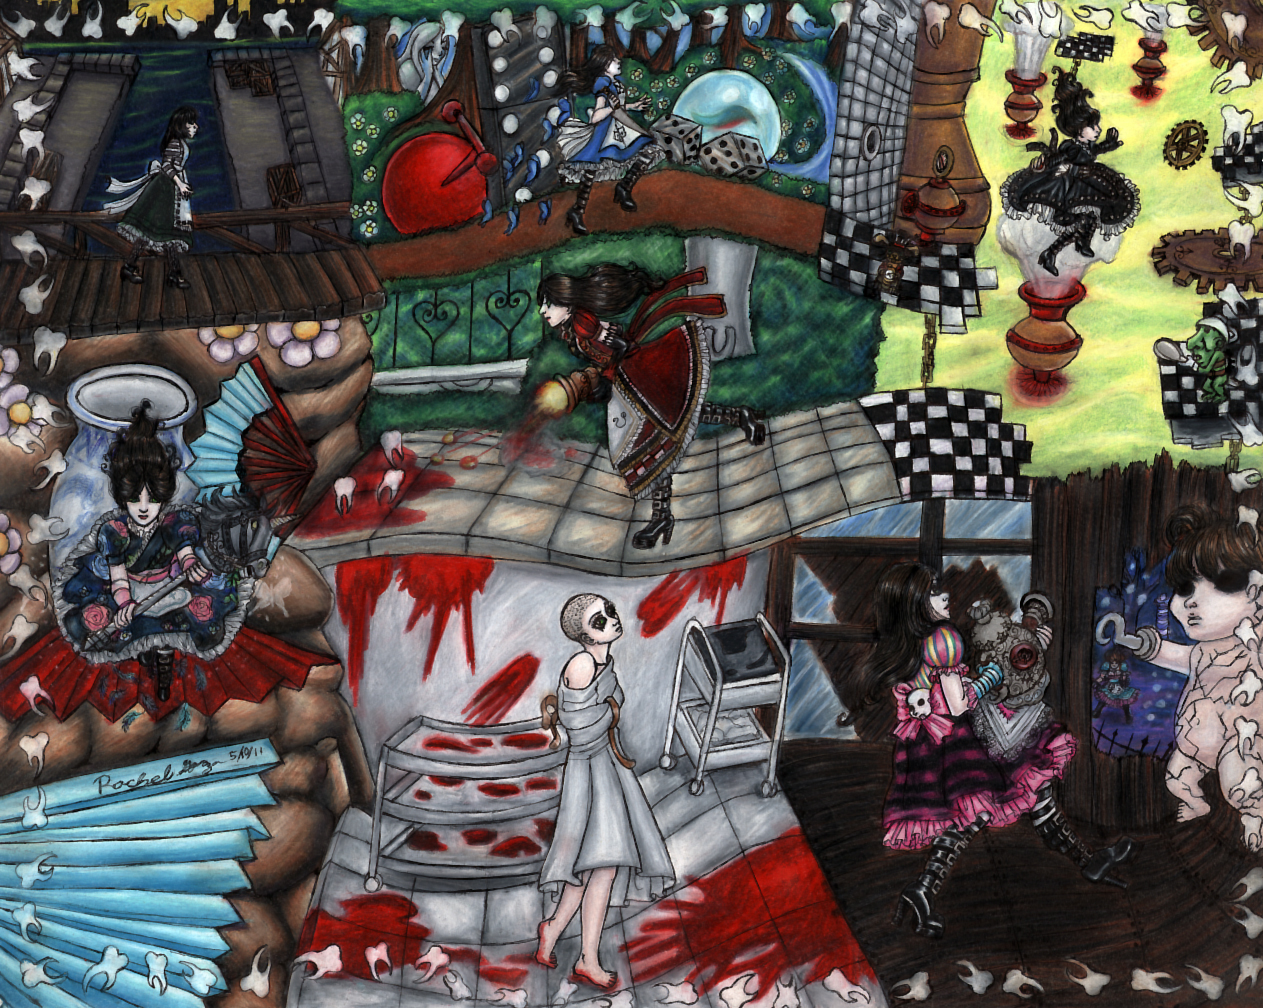 Alice Madness Returns 2 by typeATS on DeviantArt